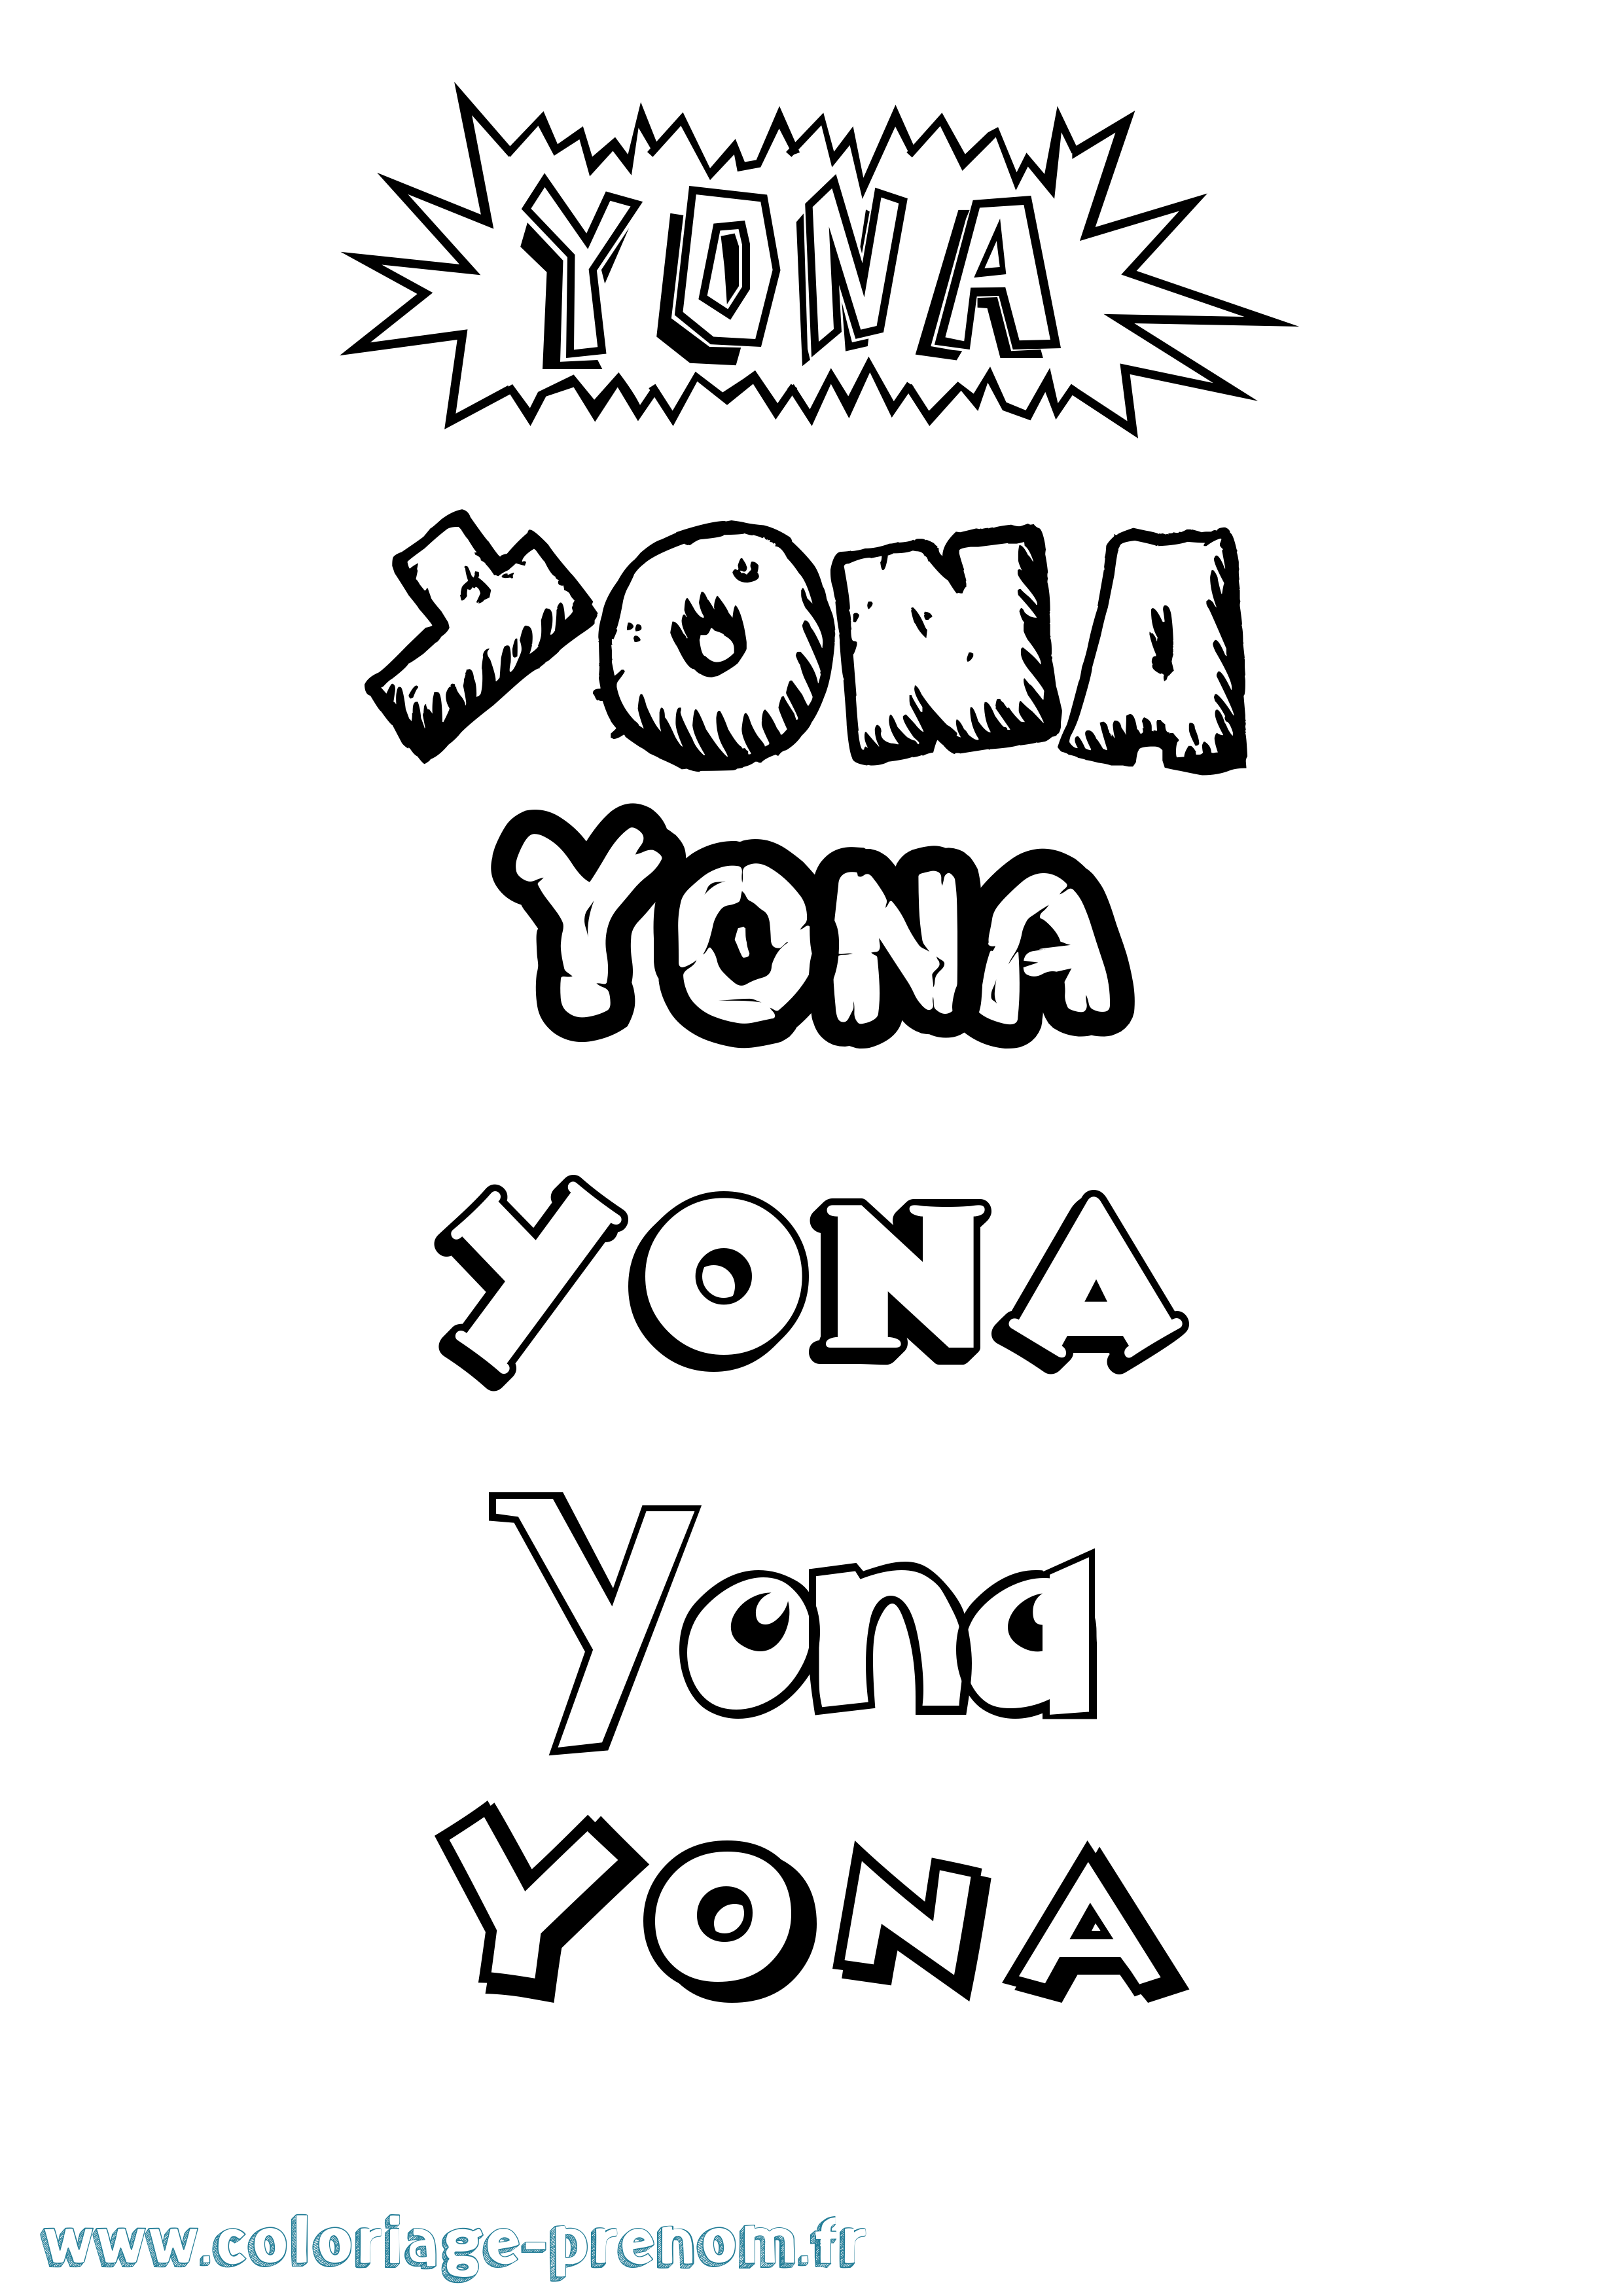 Coloriage prénom Yona